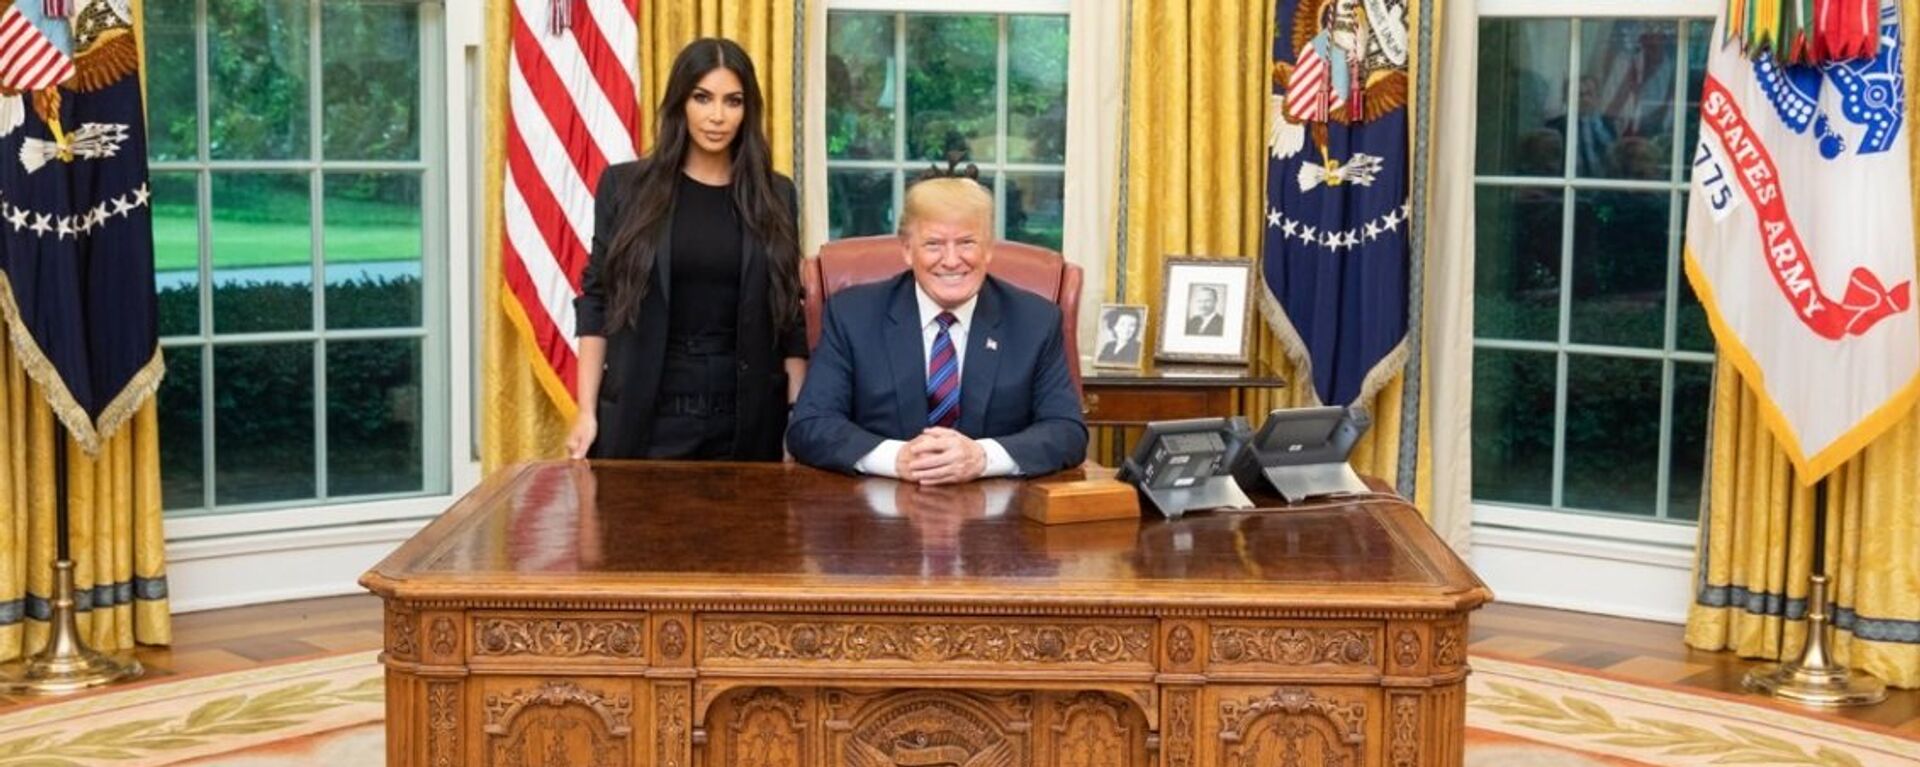 The US President Donald Trump meeting Kim Kardashian in the White House - Sputnik International, 1920, 07.11.2019